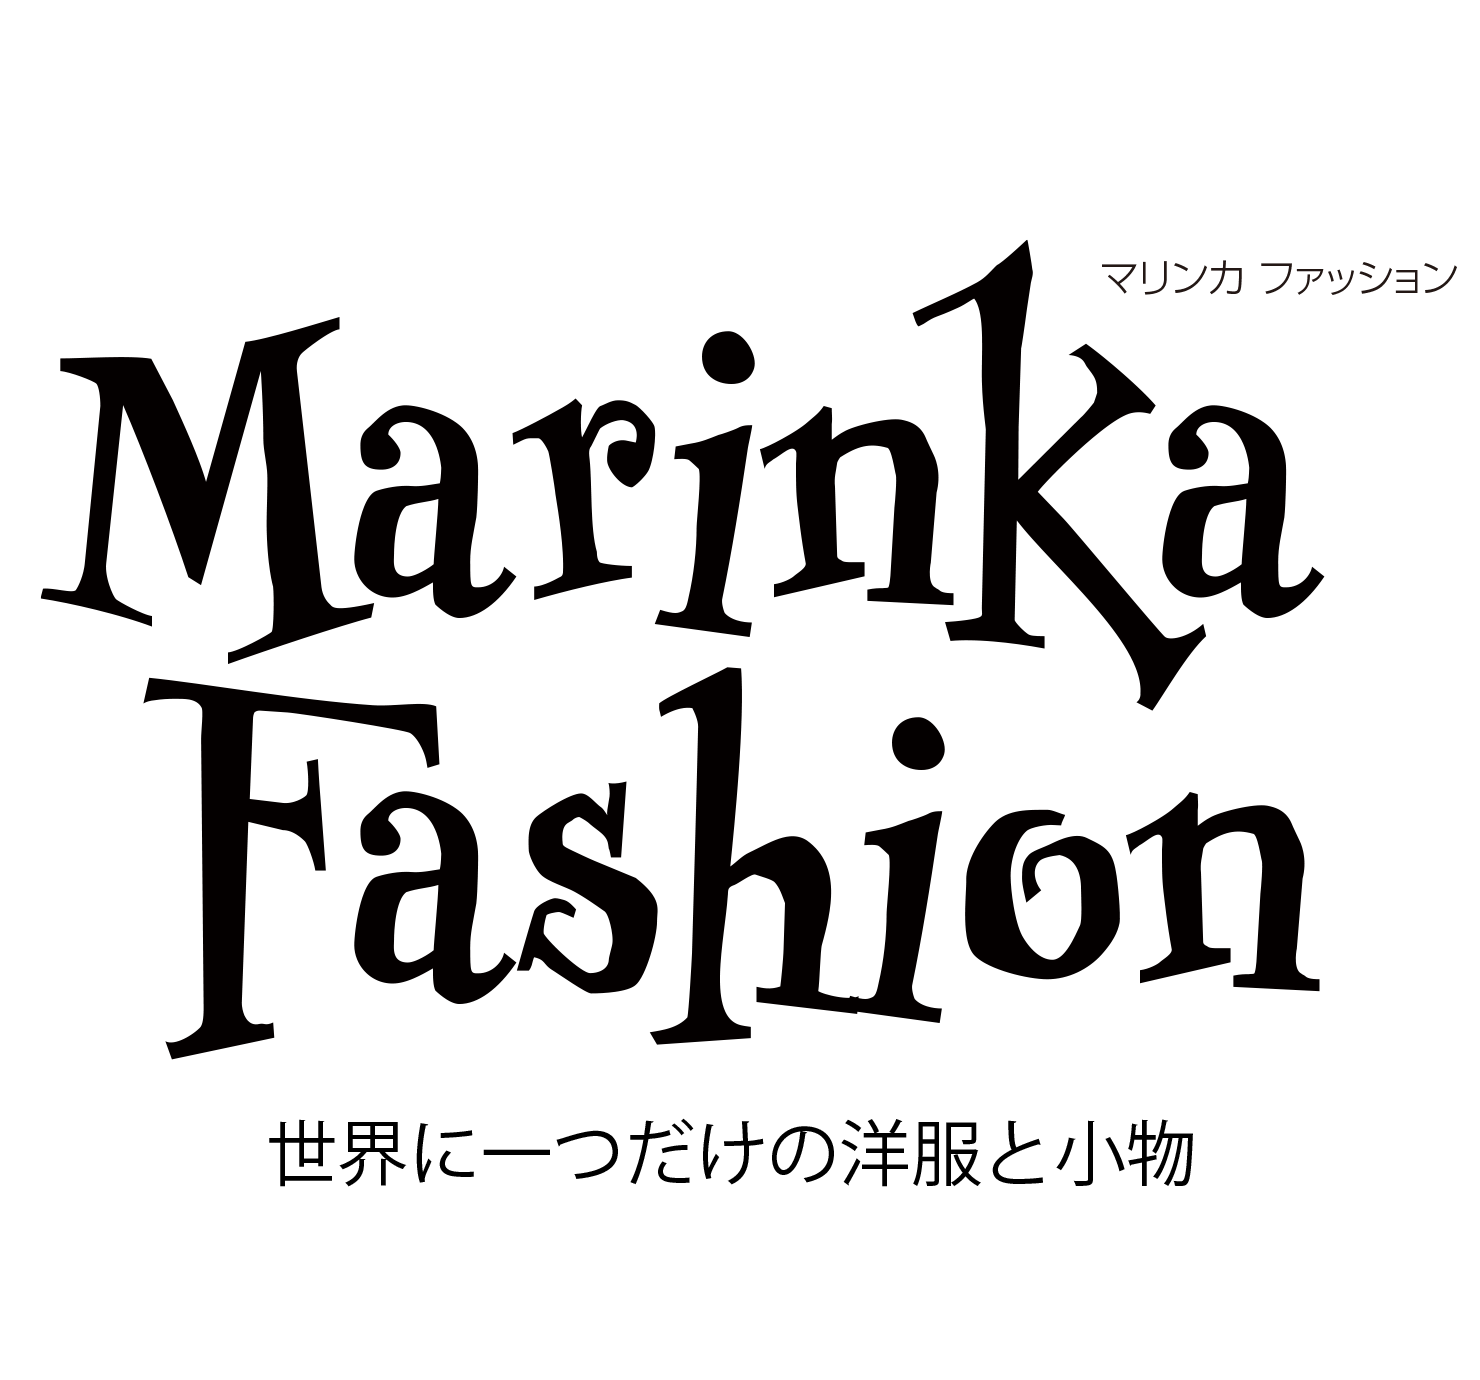 Marinka fashion 